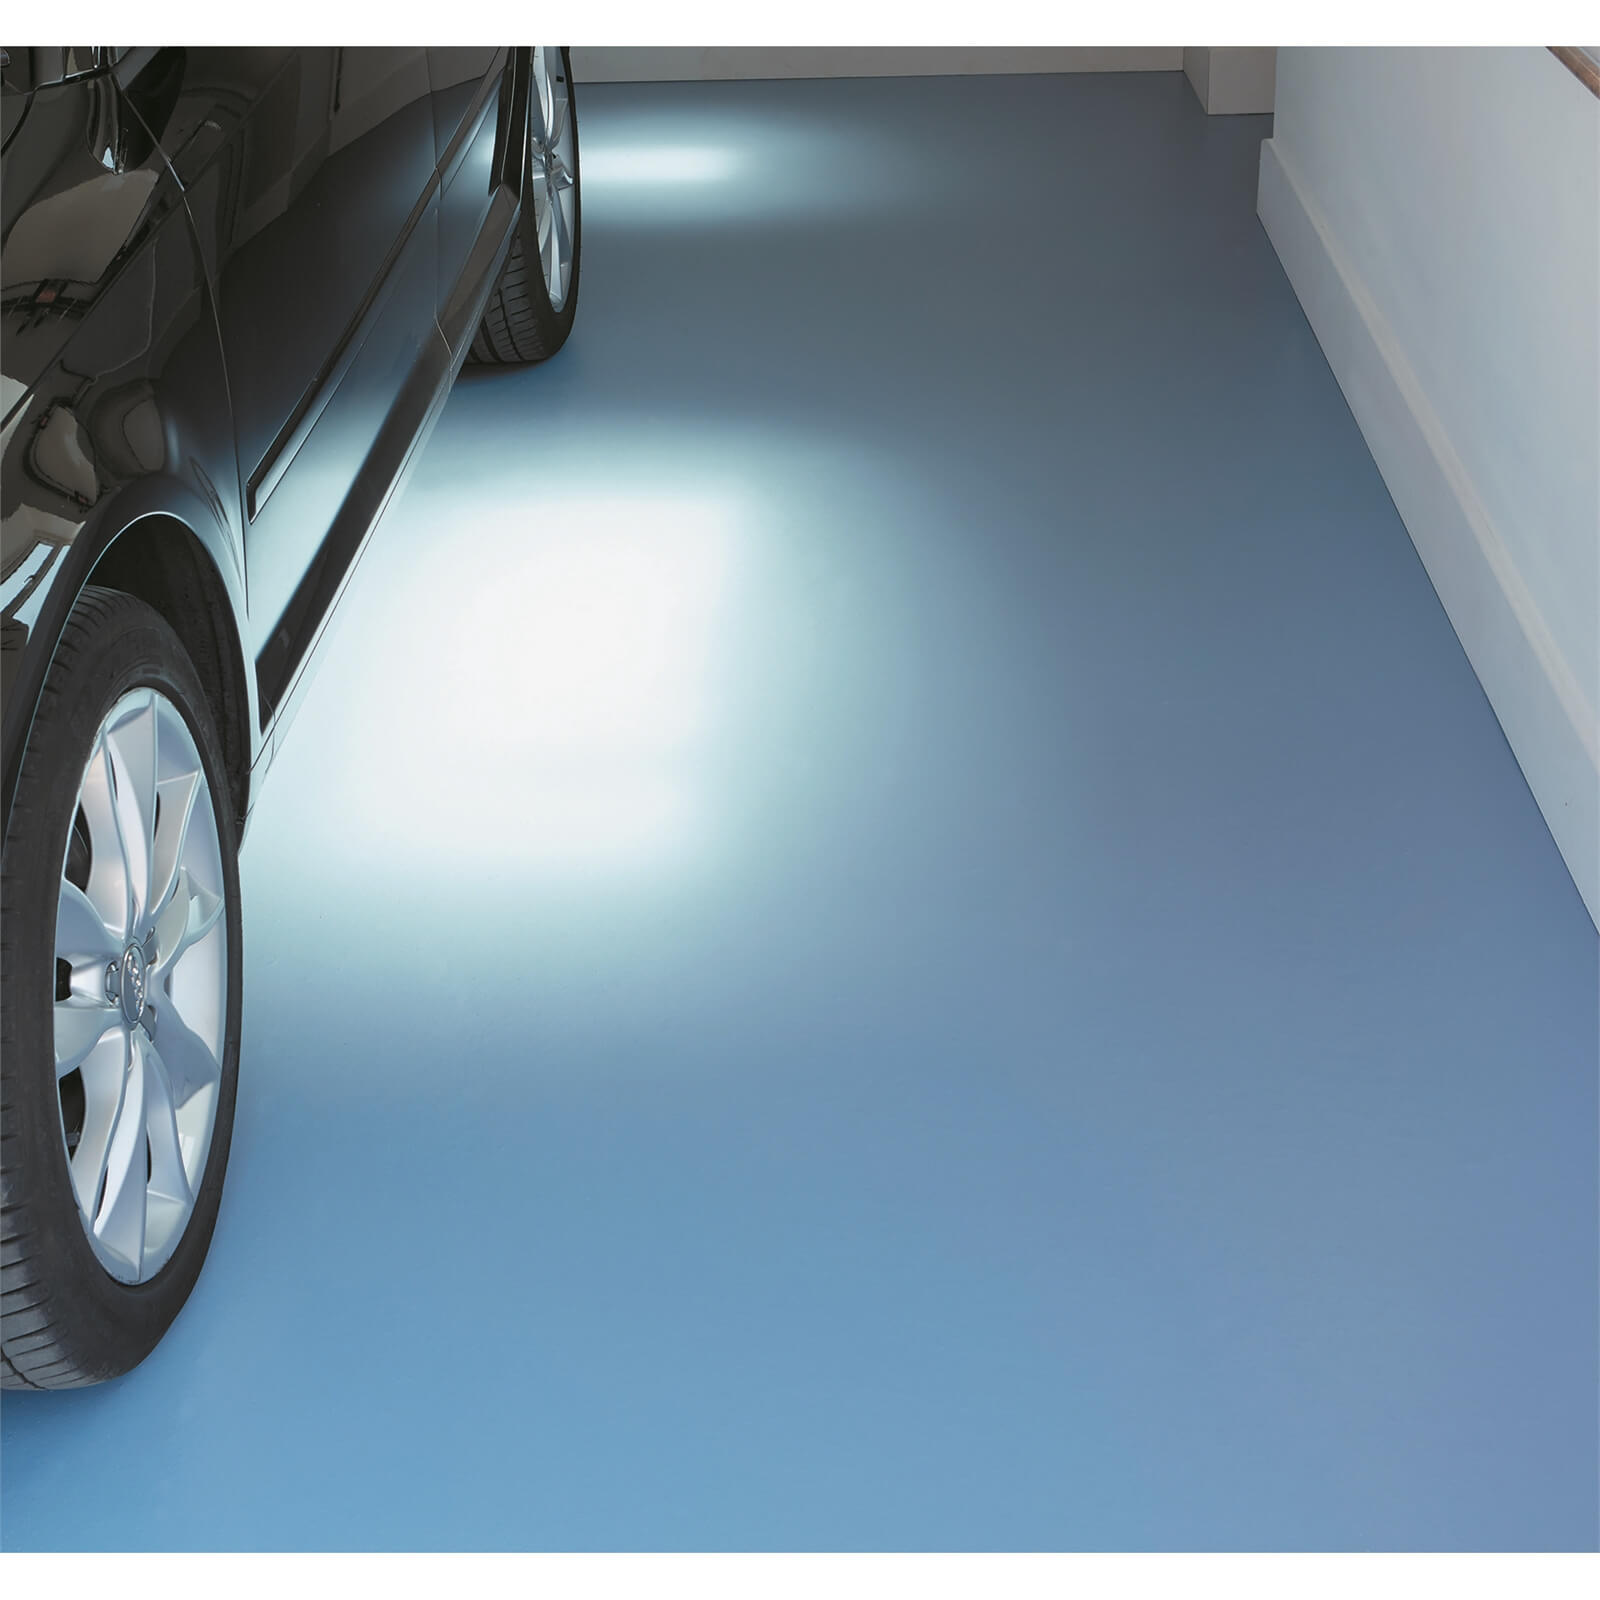 Ronseal Diamond Hard Garage Floor Paint Slate - 2.5L